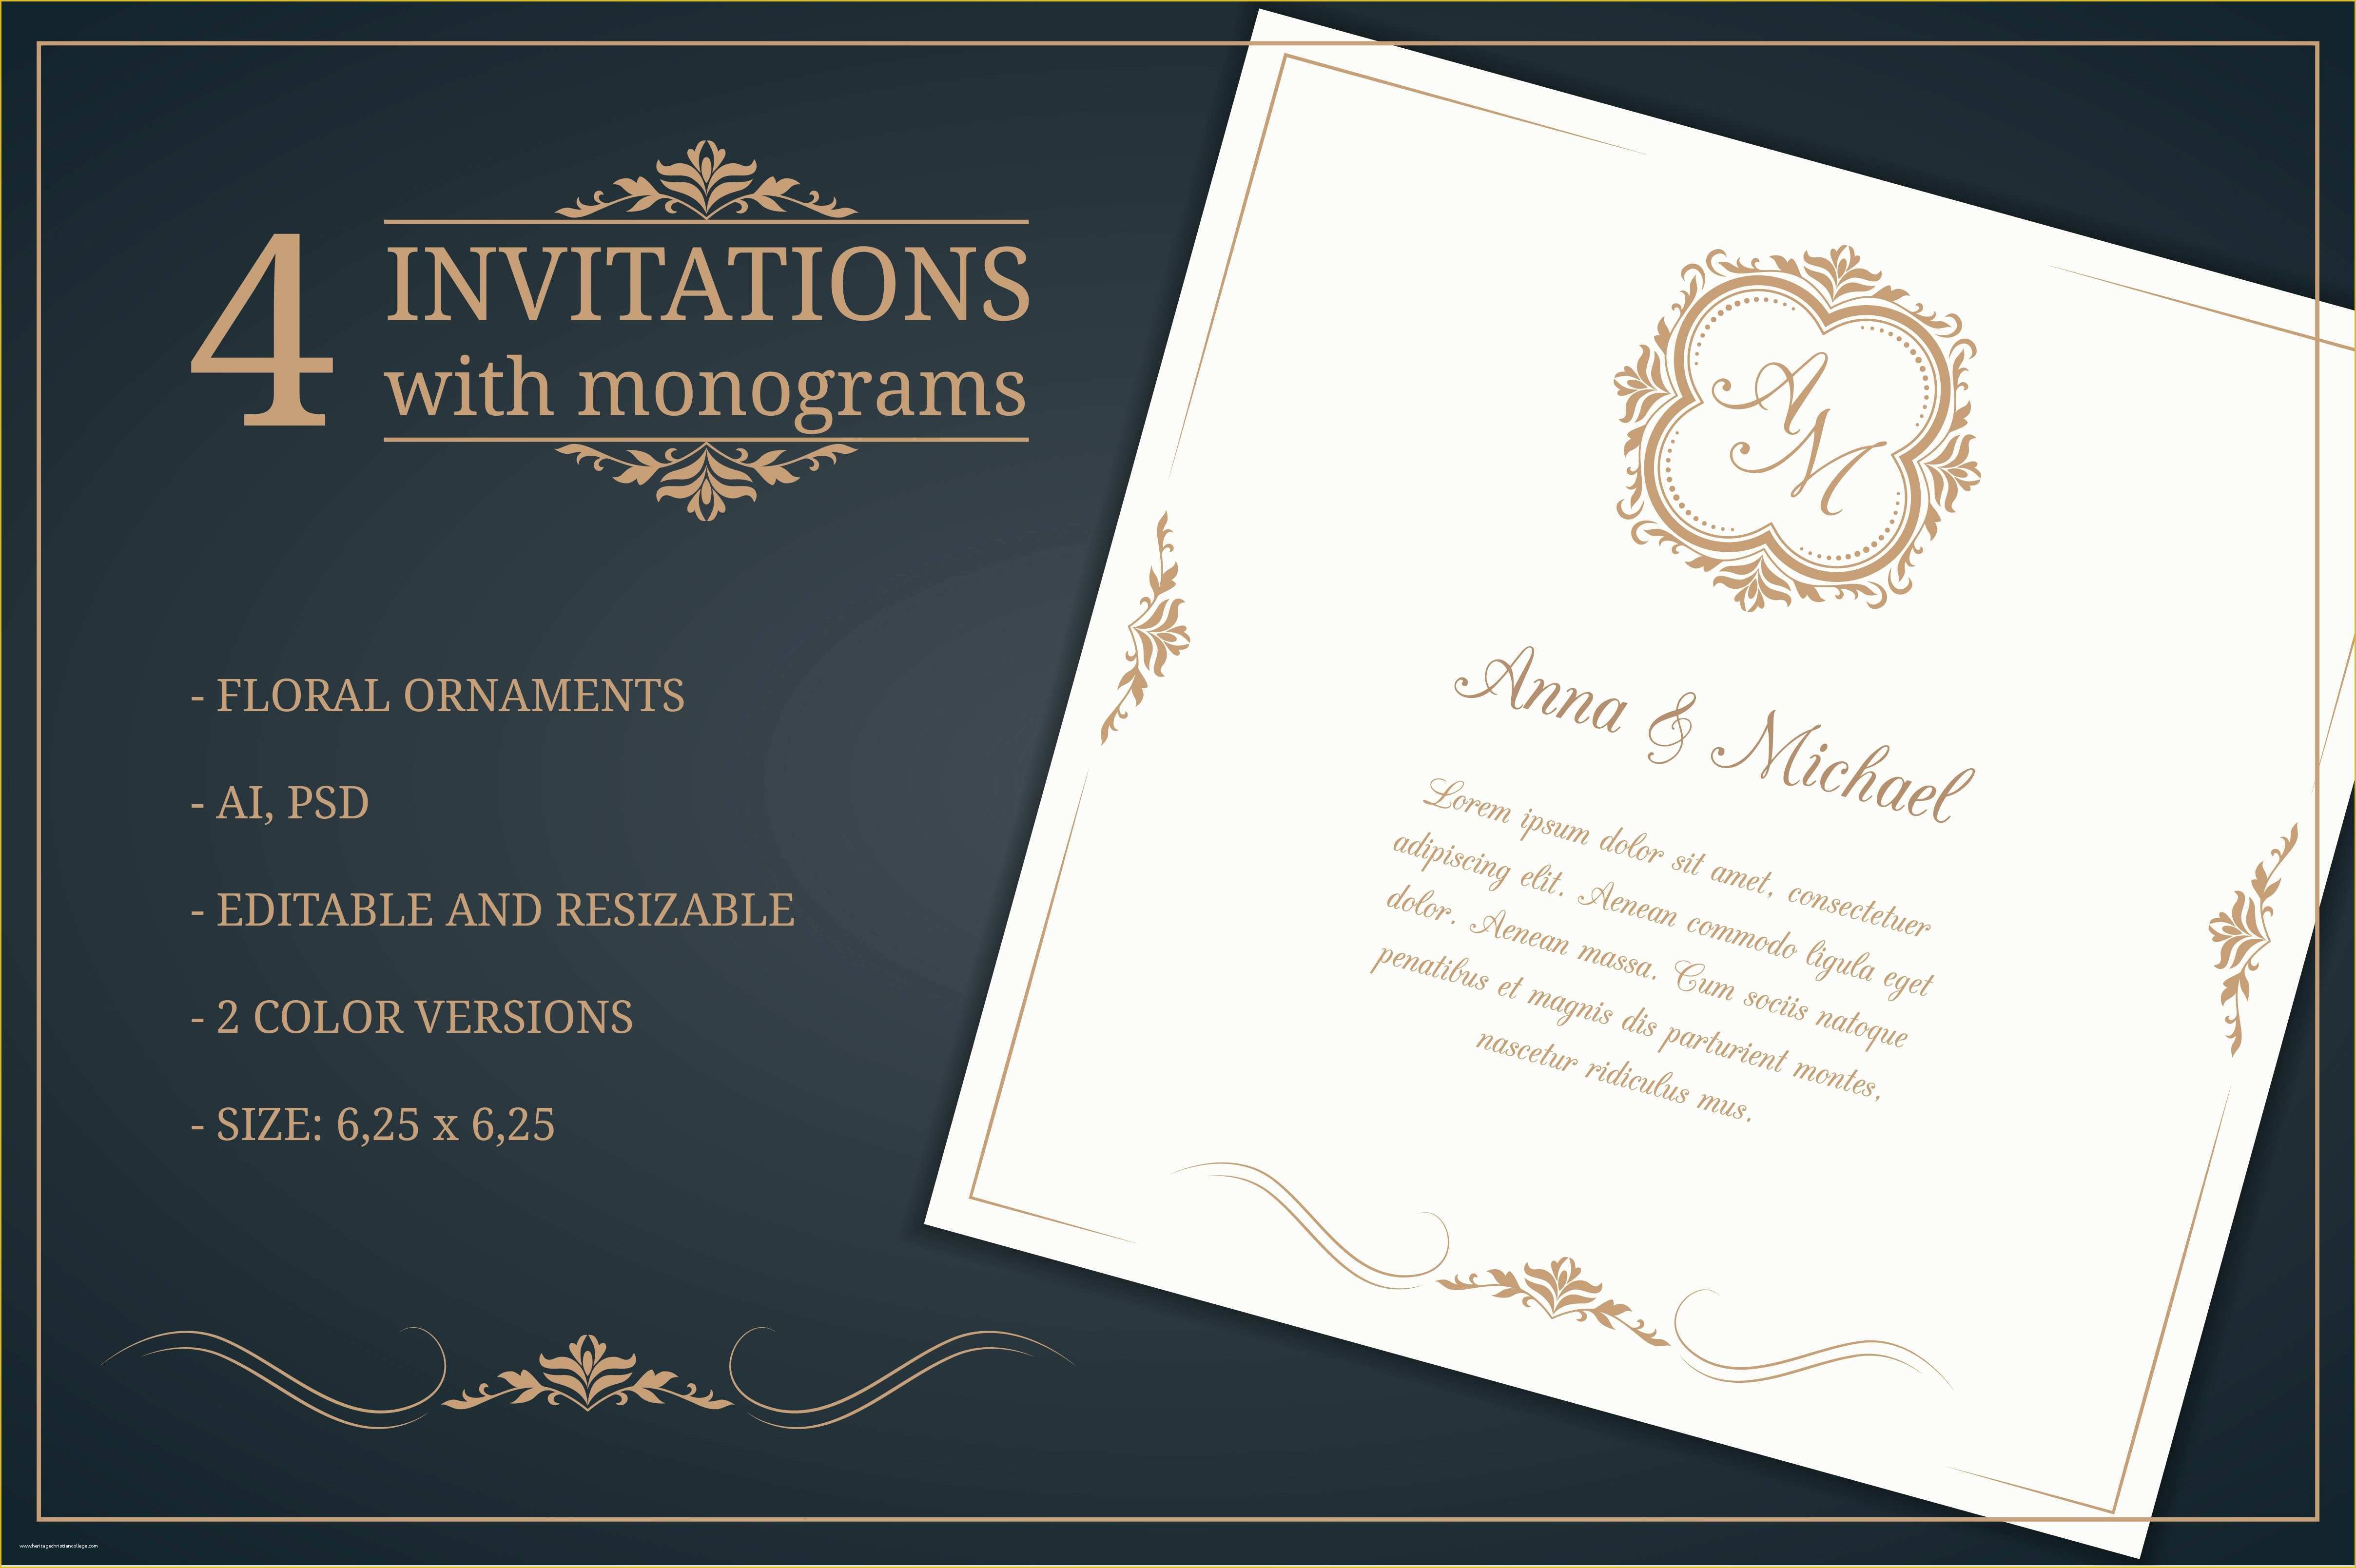 Free Printable Wedding Invitations Templates Downloads Of Wedding Invitations with Monograms Wedding Templates